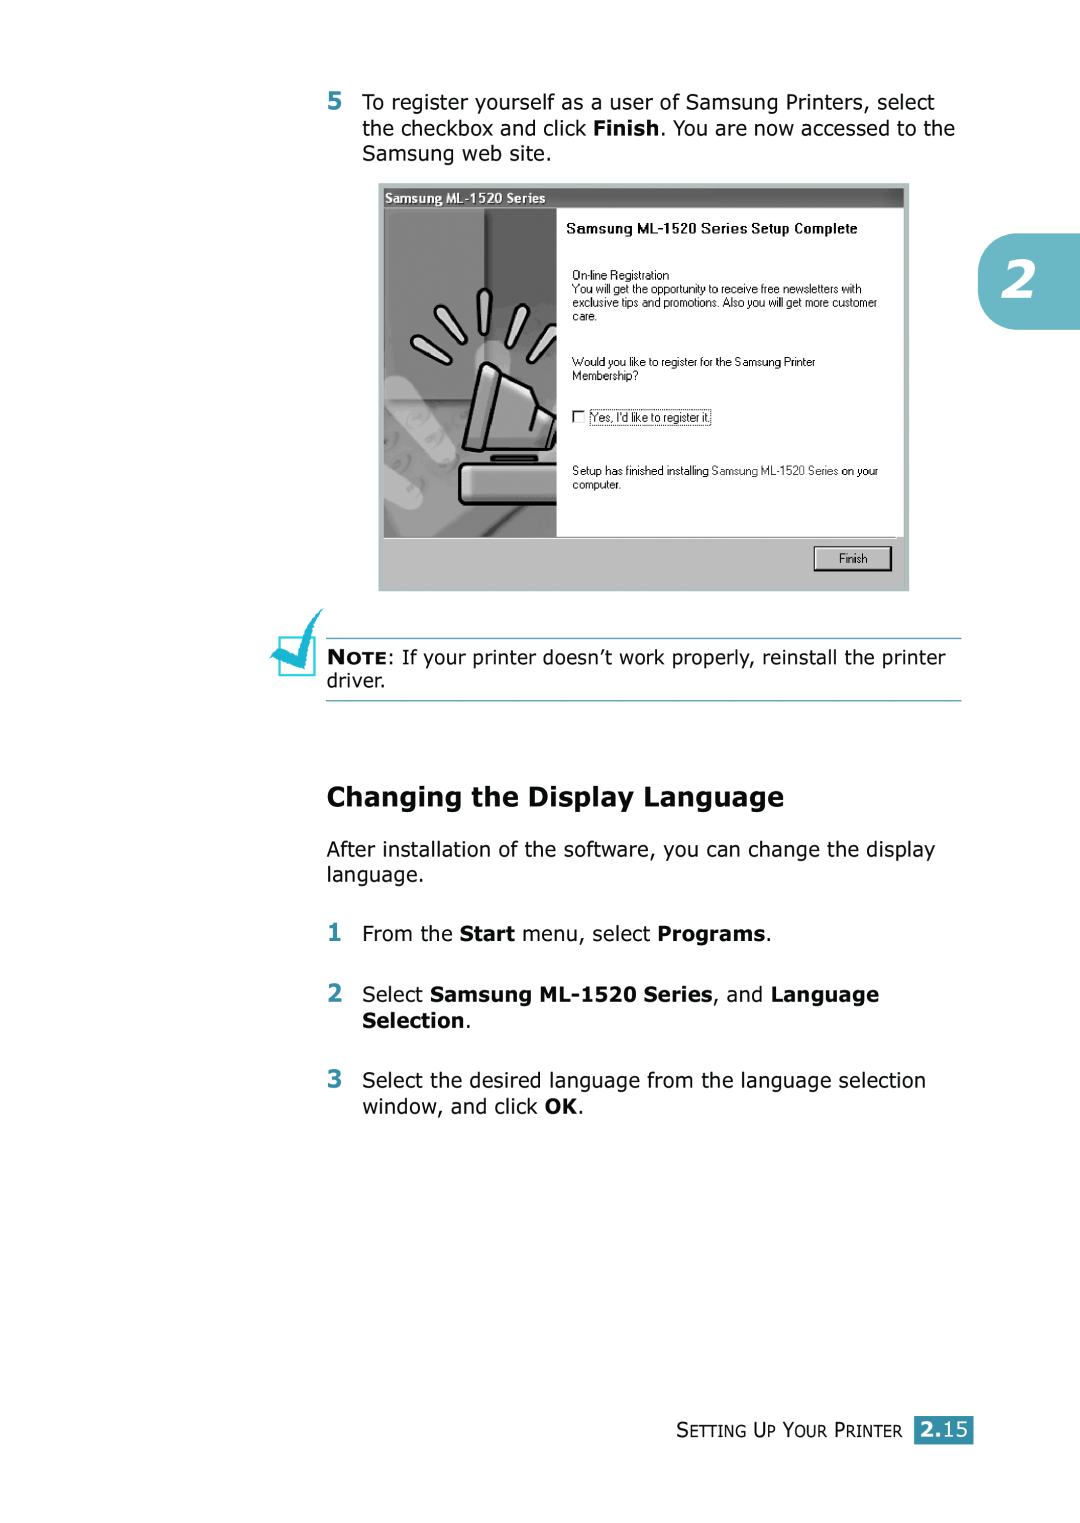 Samsung manual Changing the Display Language, Select Samsung ML-1520 Series, and Language Selection 